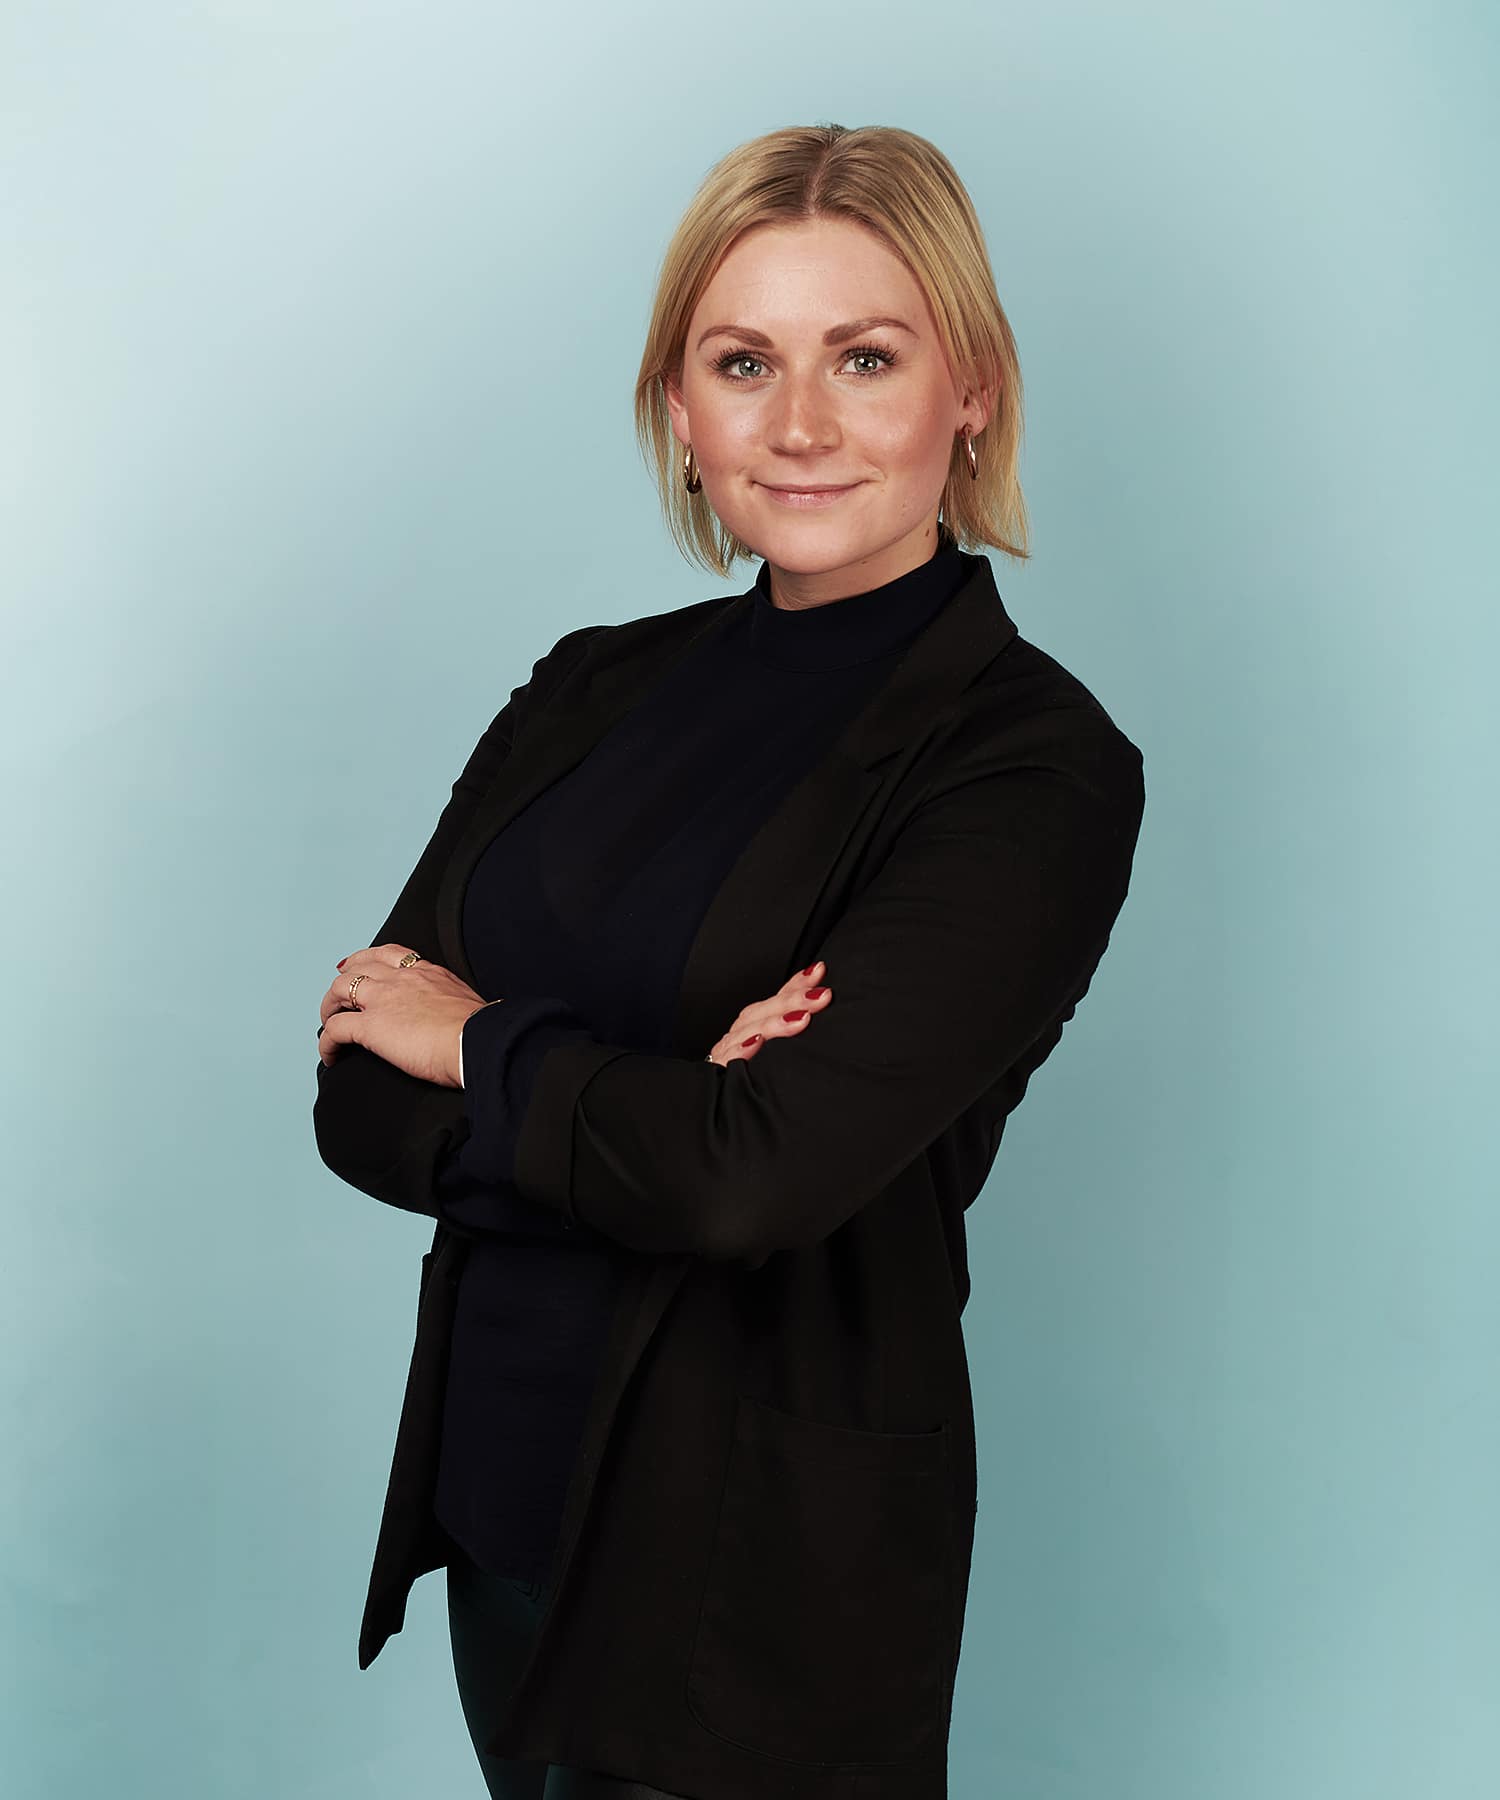 Louise Levi Verge, 28 år, arbejder som Senior Influencer Marketing Advisor hos Bloggers Delight i Aarhus.